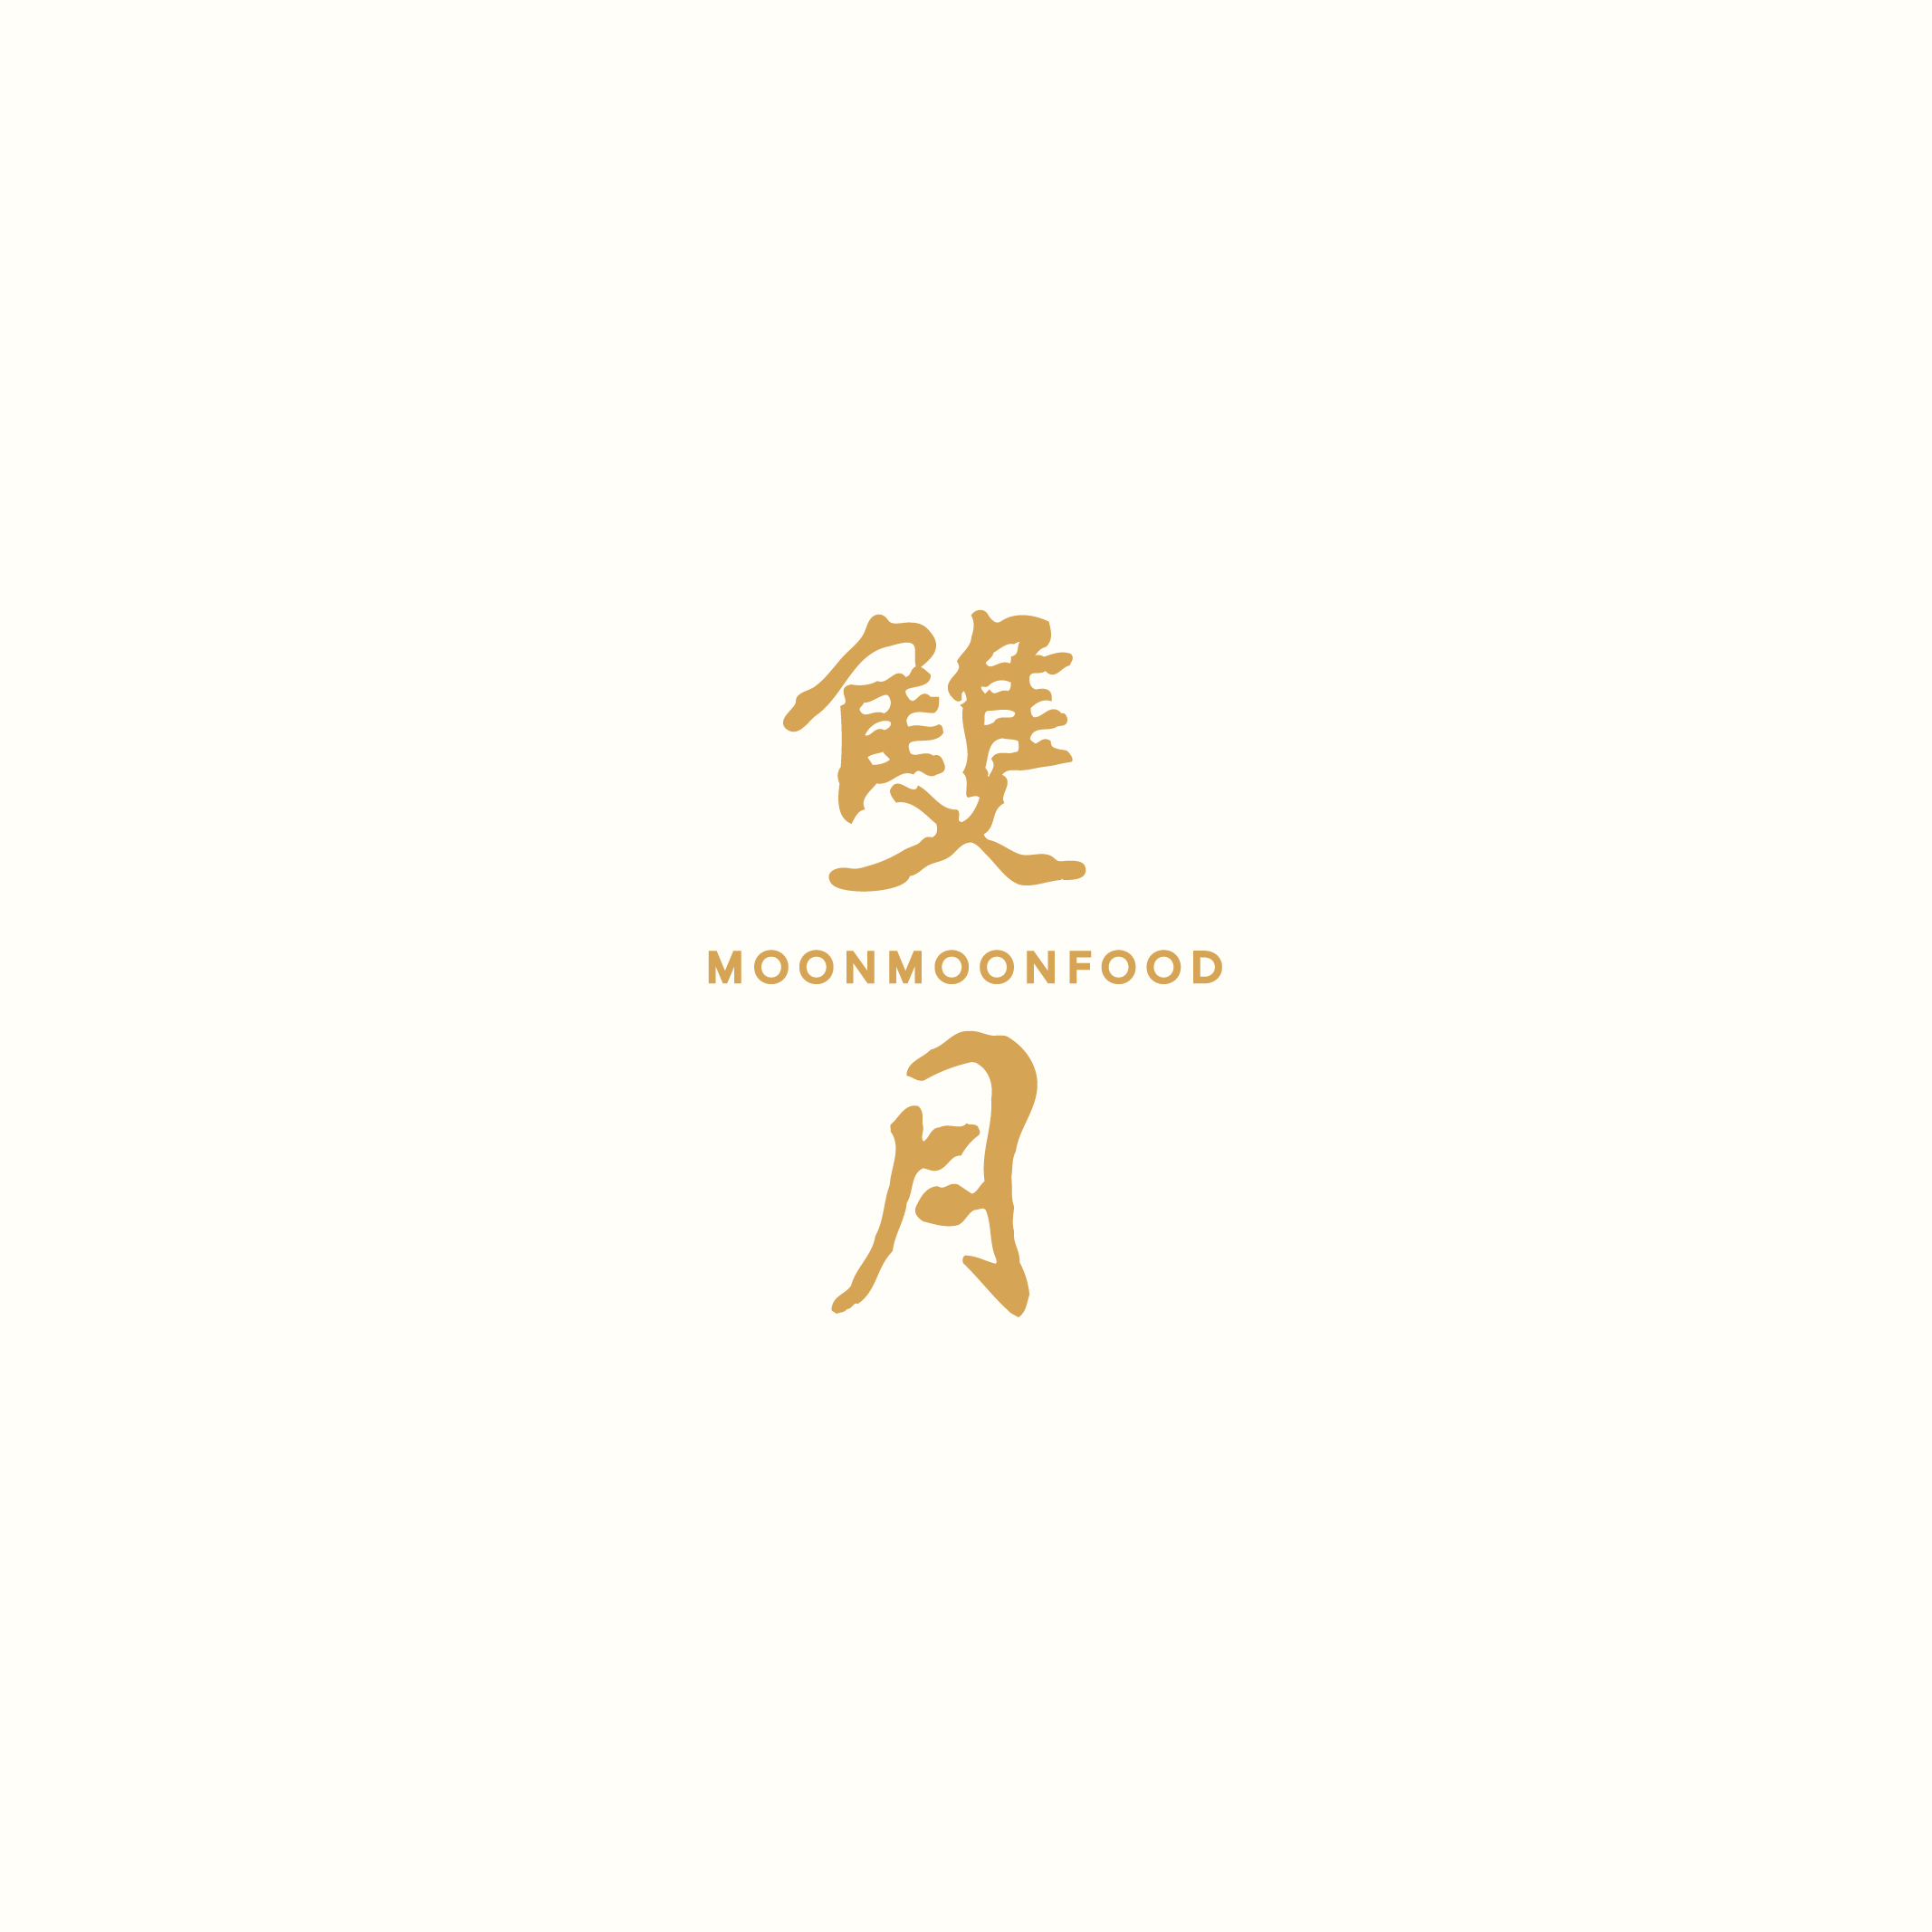 moonmoonfood